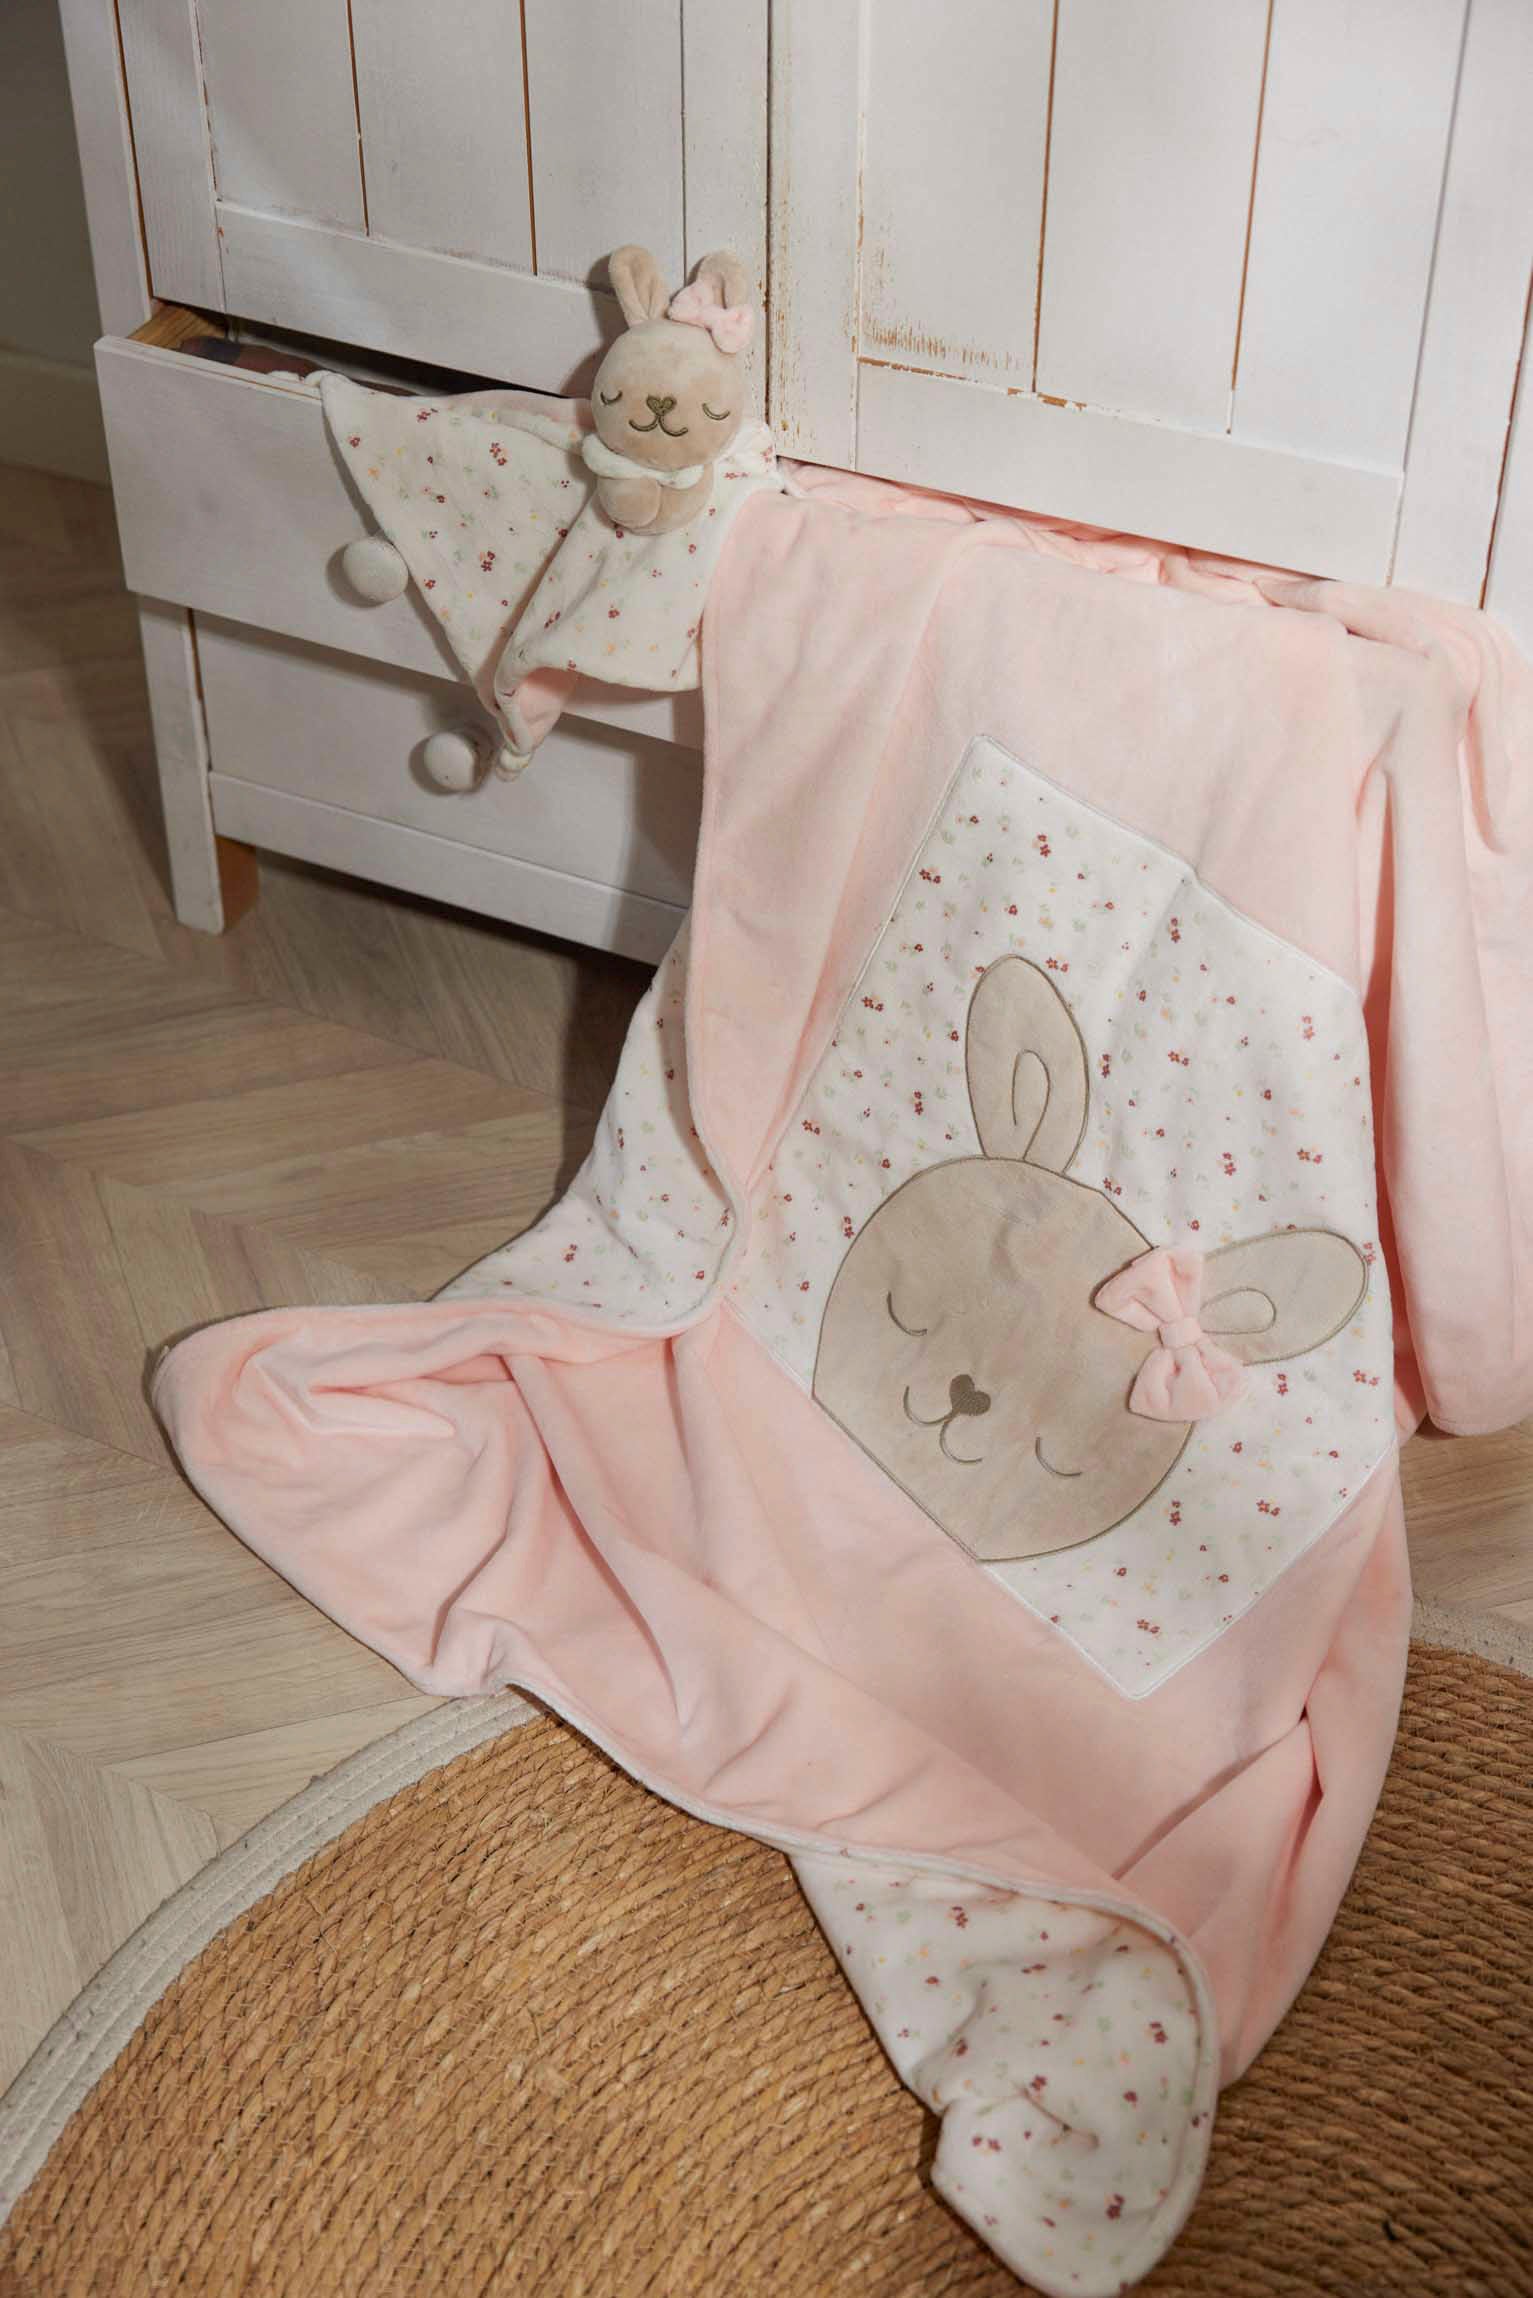 Conjunto para bebé camisola + leggings - ROSA - Kiabi - 20.00€